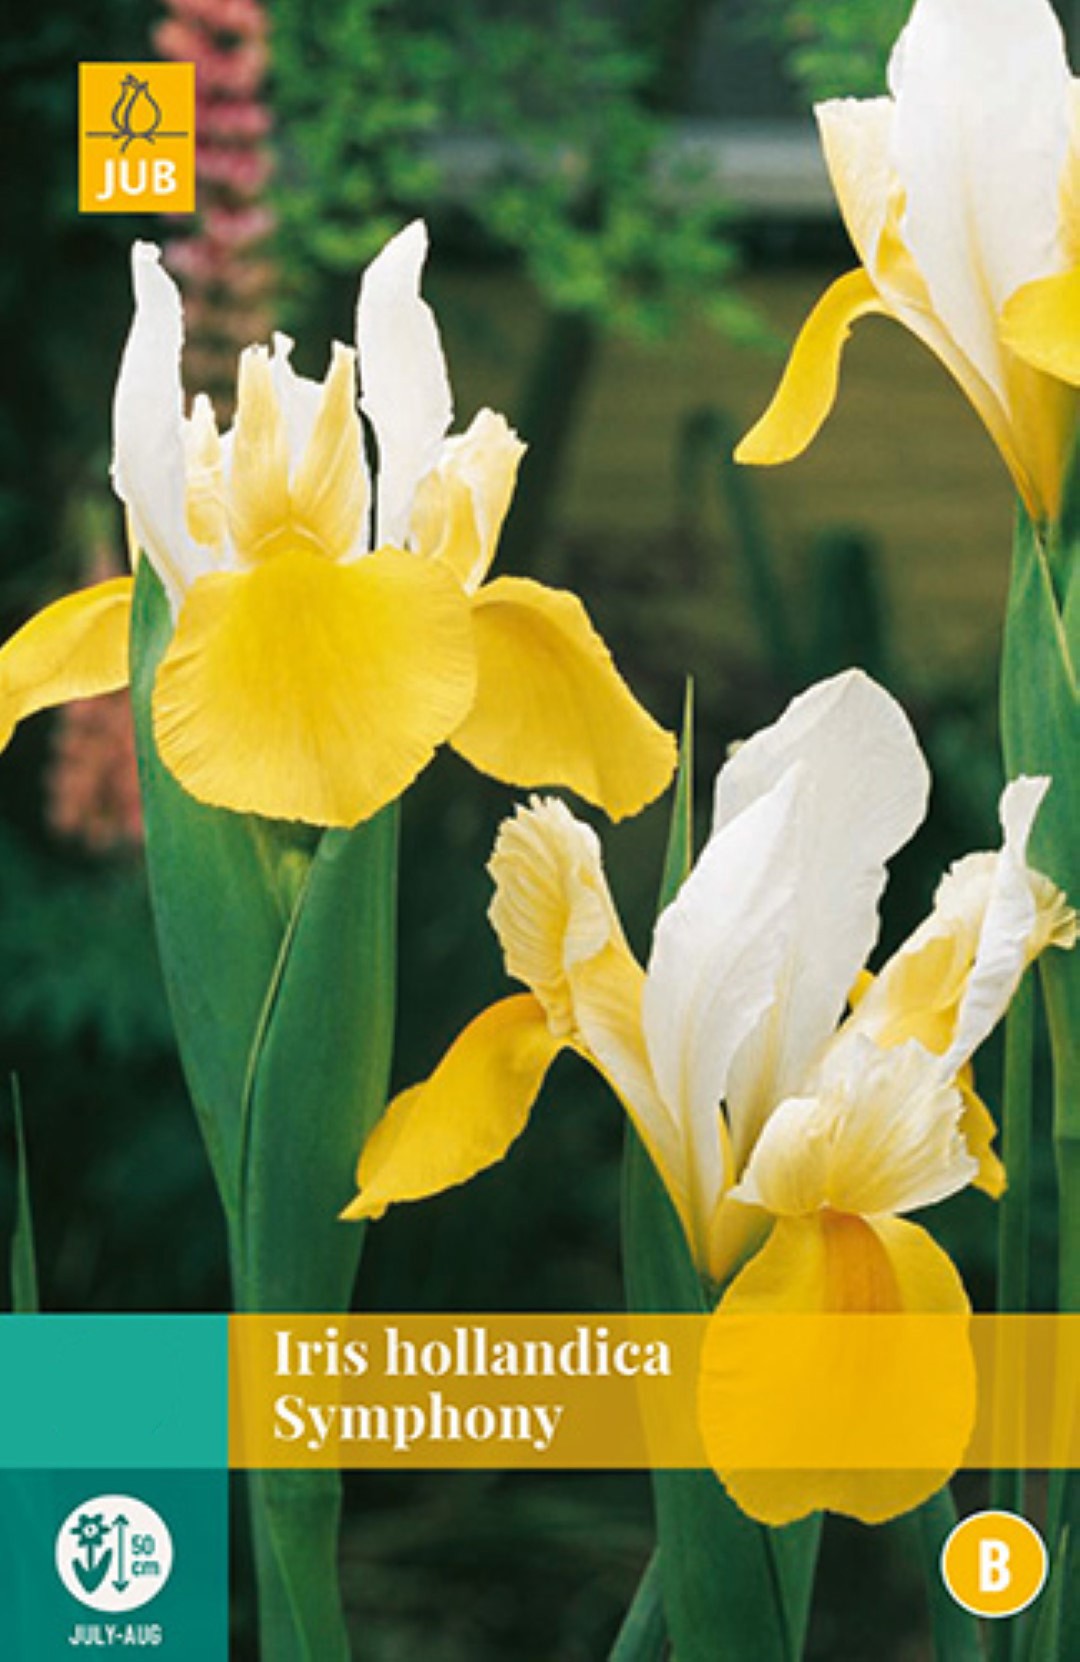 Iris Hollandica Symphony 20 bollen - JUB